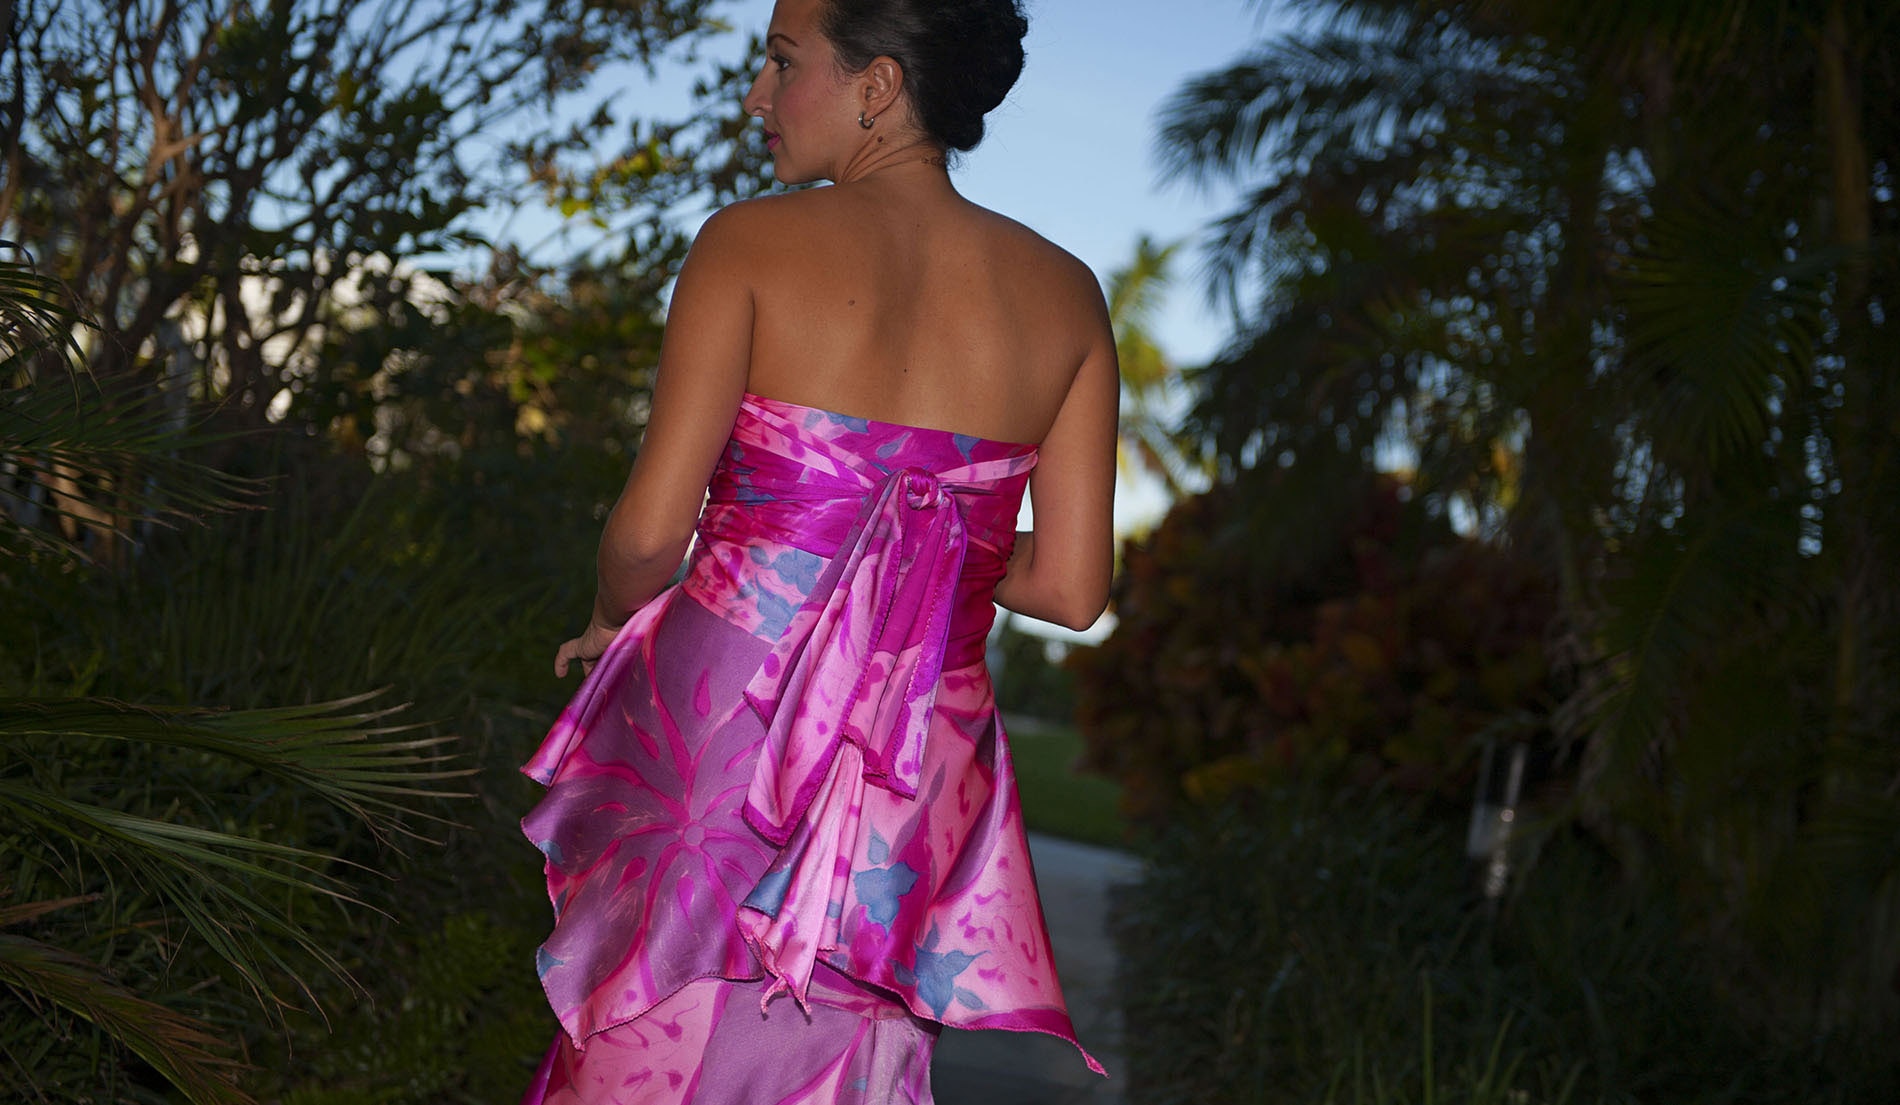 Elegant Mermaid Style Beach Wedding Dresses - Martinique - Look 1 back